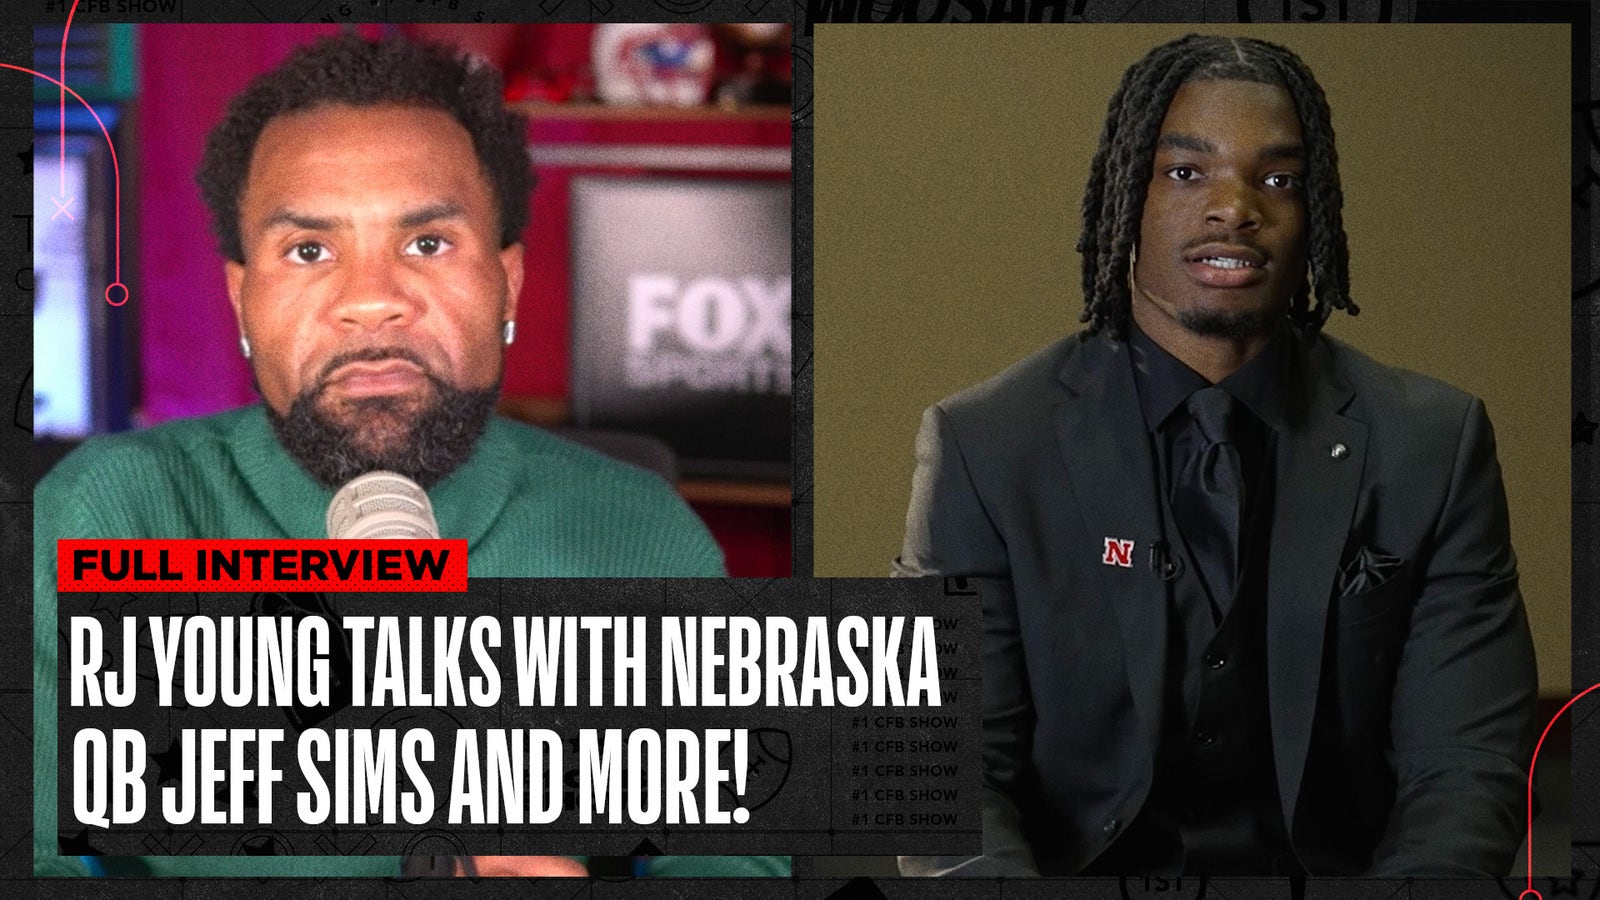 Interviews with Penn State's James Franklin, Nebraska's Matt Rhule and more